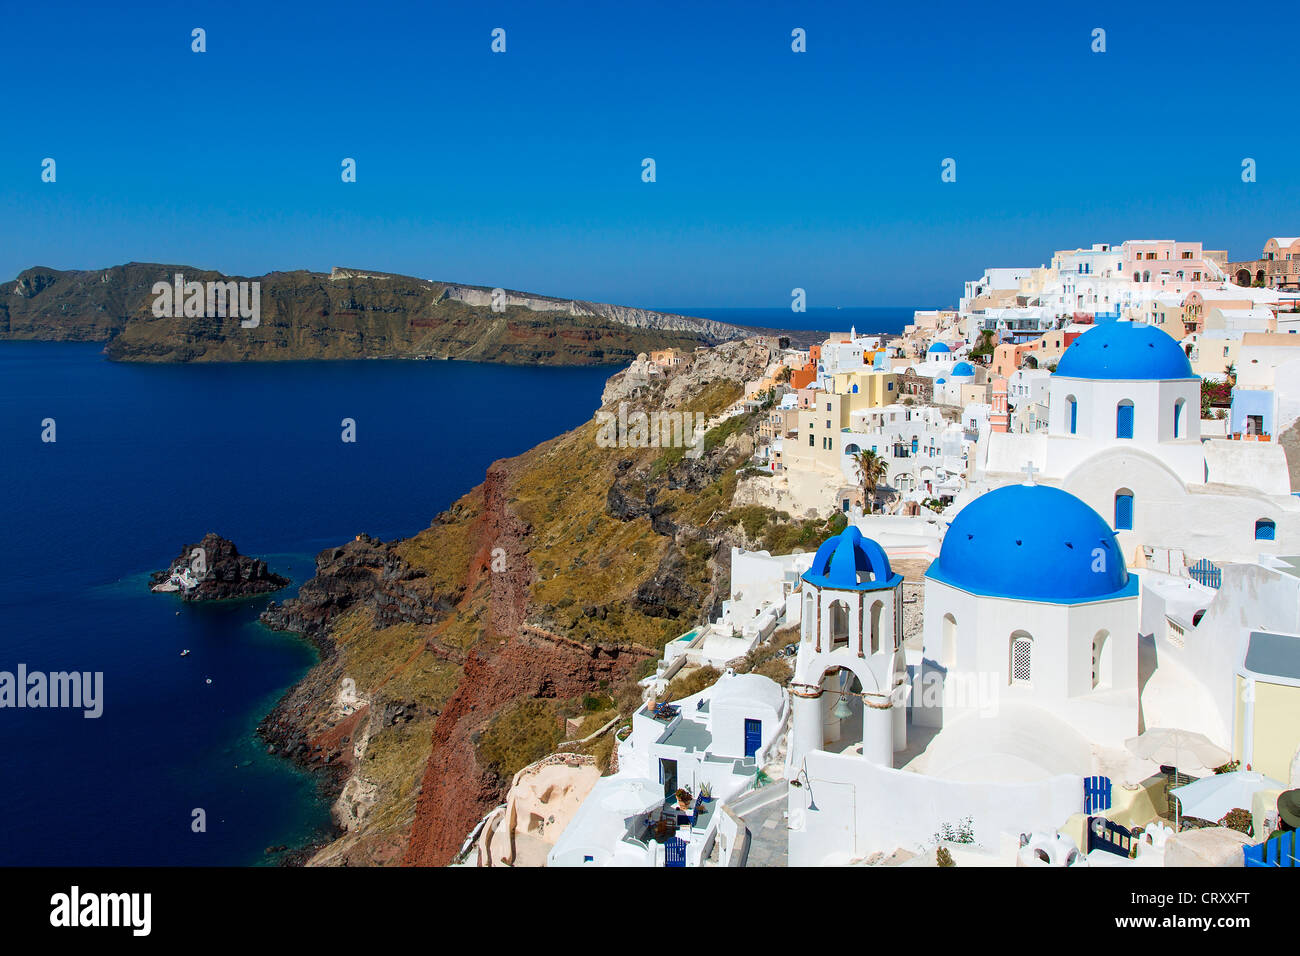 Grecia Santorini Oia blu cupola chiesa ortodossa Foto Stock